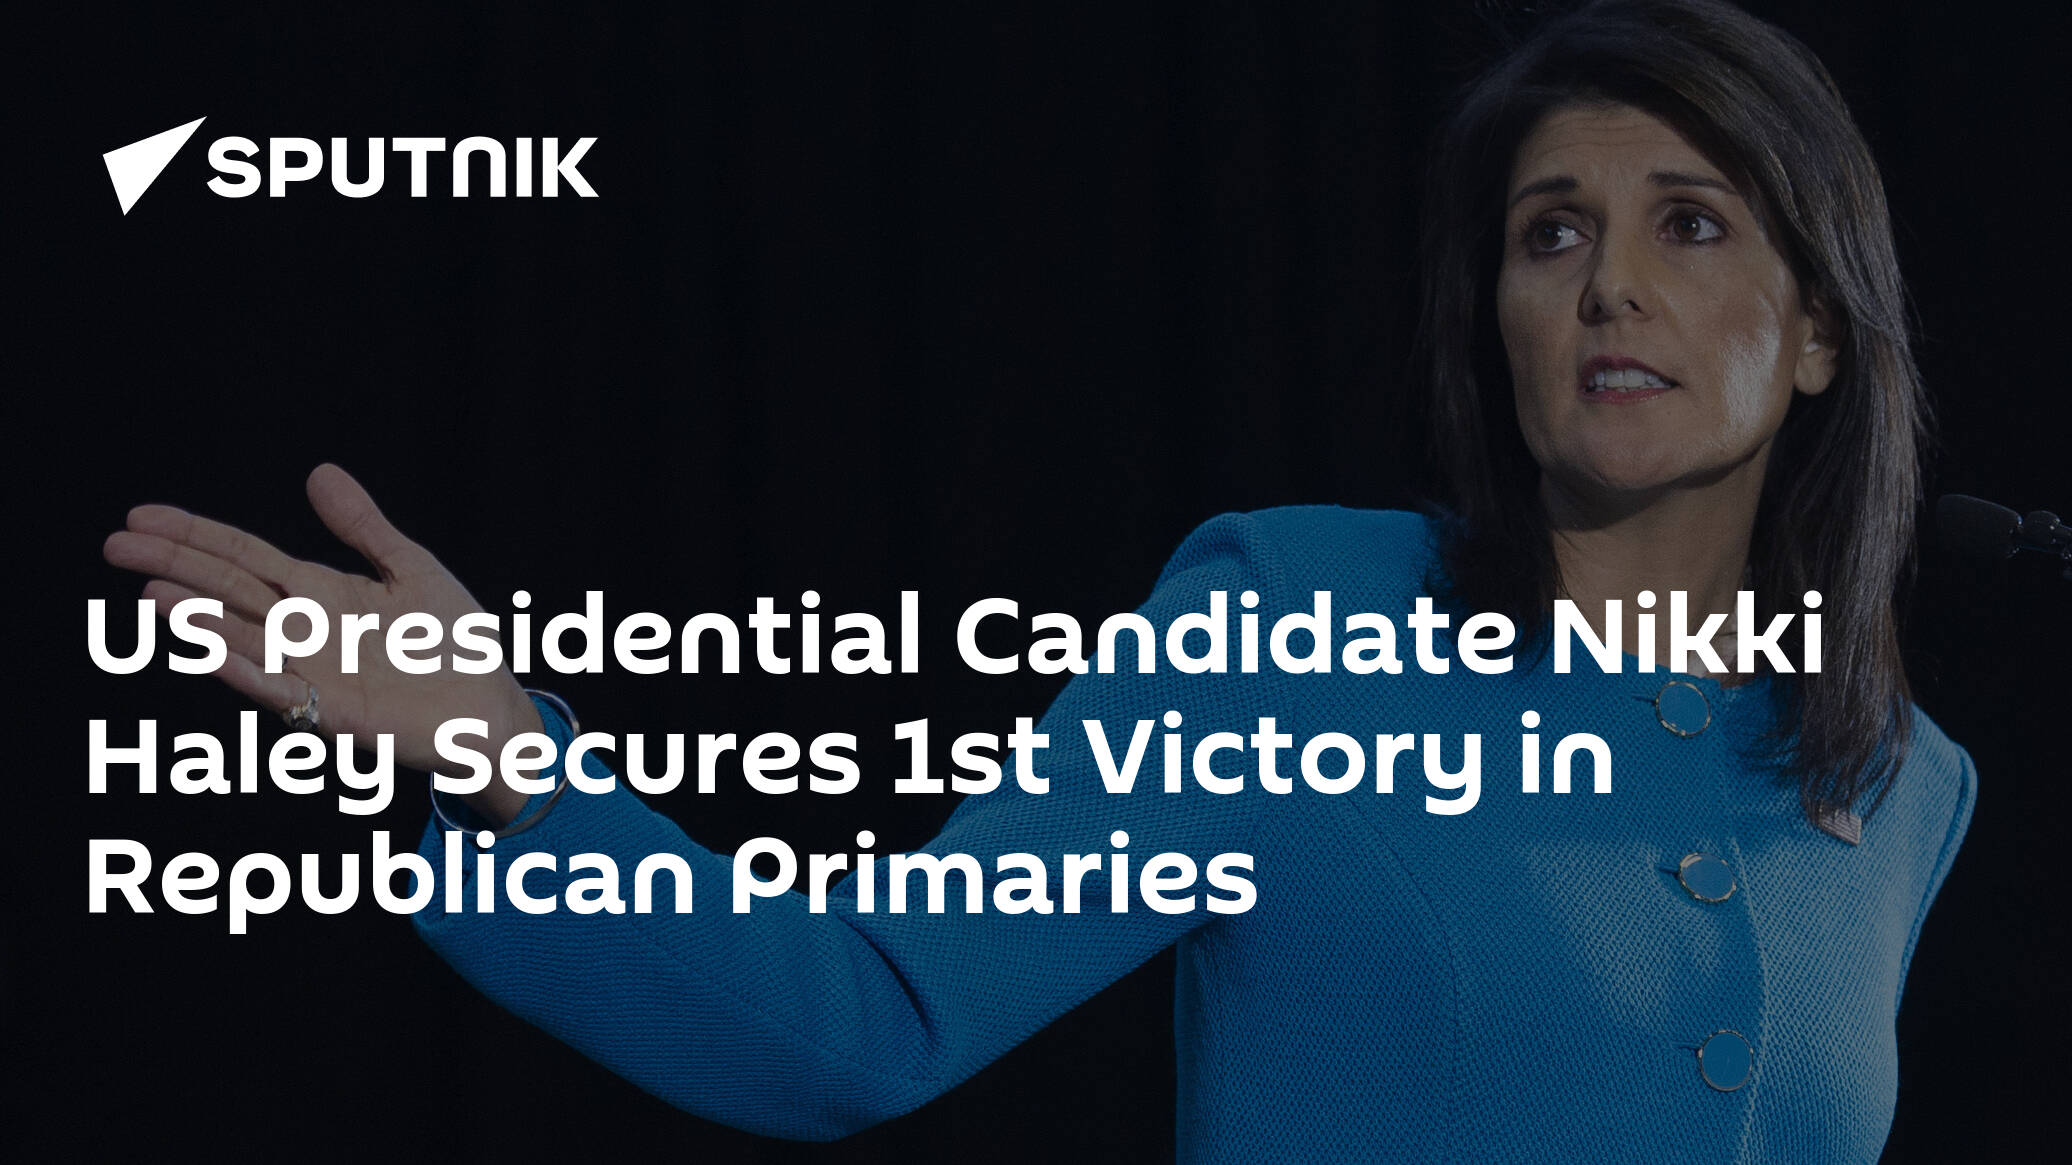 US Presidential Candidate Nikki Haley Secures 1st Victory in Republican Primaries